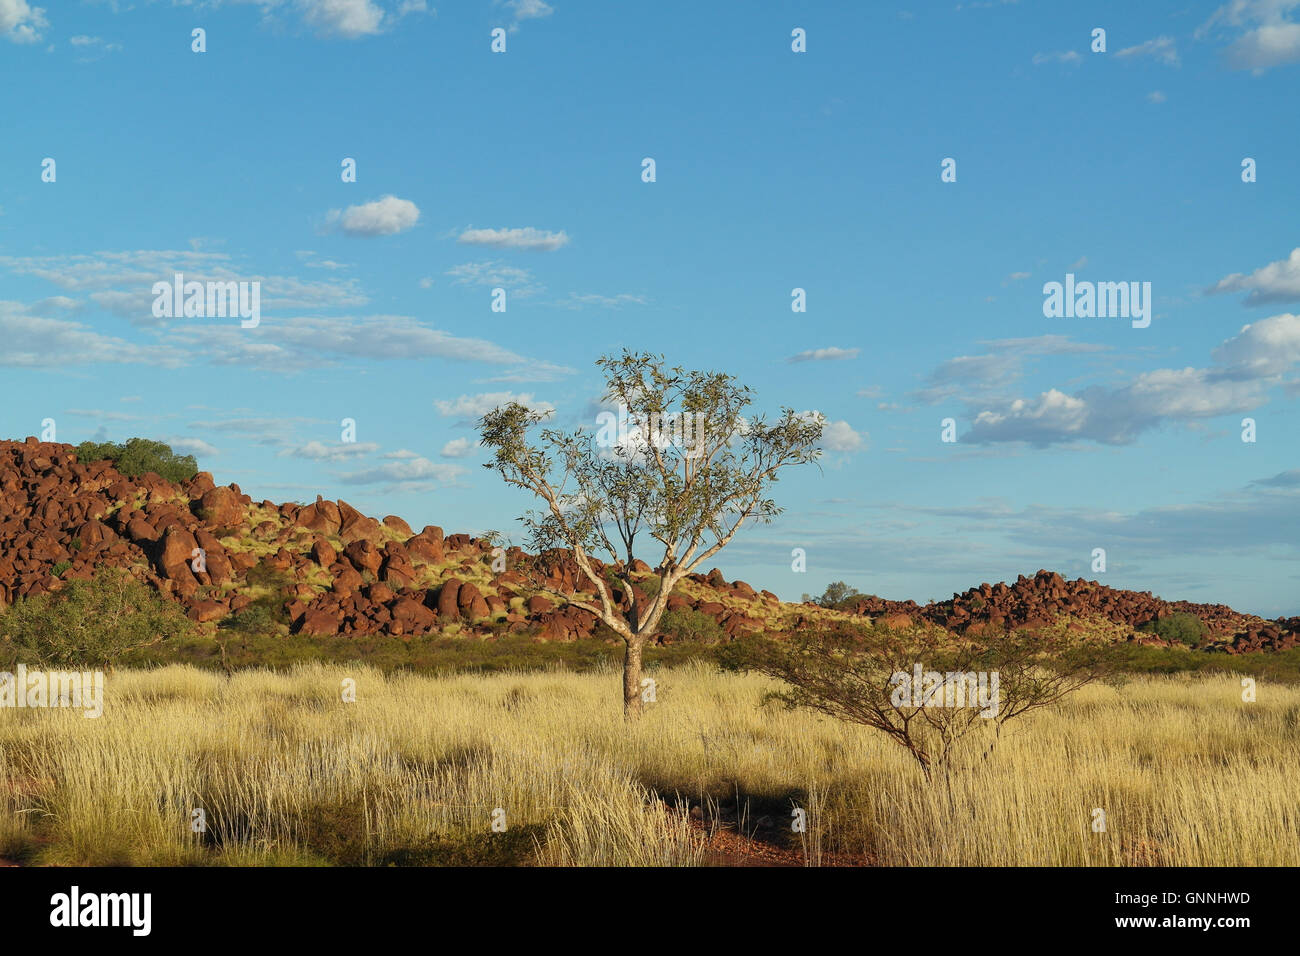 Typical Outback landscape in the Karijini Range / Pilbara - Western Australia - Australia Stock Photo